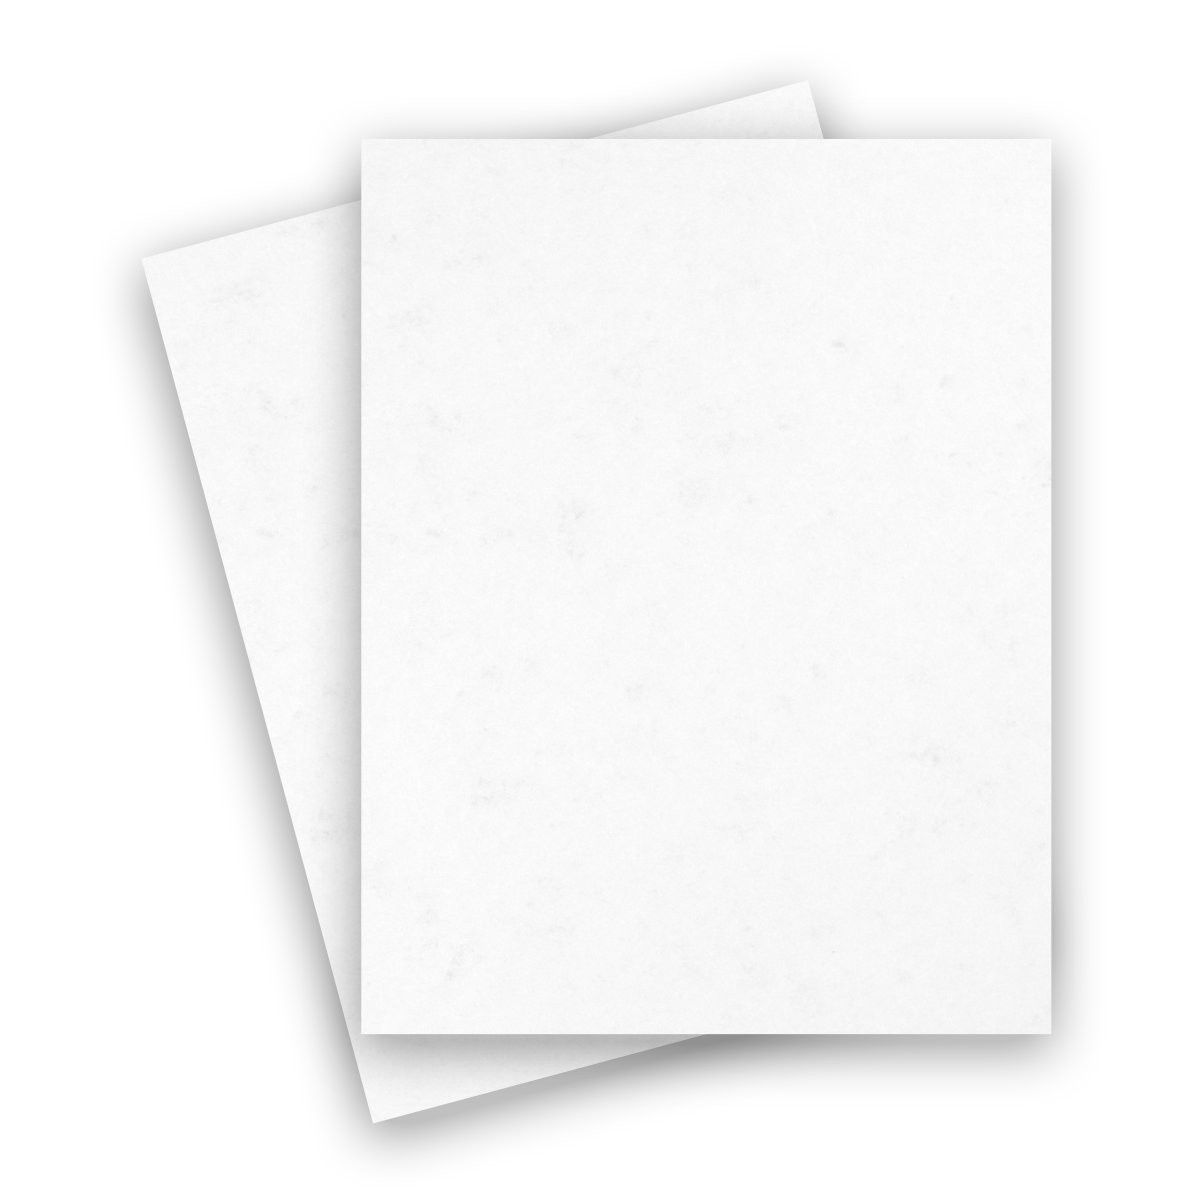 DUROTONE Newsprint WHITE - 8.5X11 Card Stock Paper - 80lb Cover - 50 PK